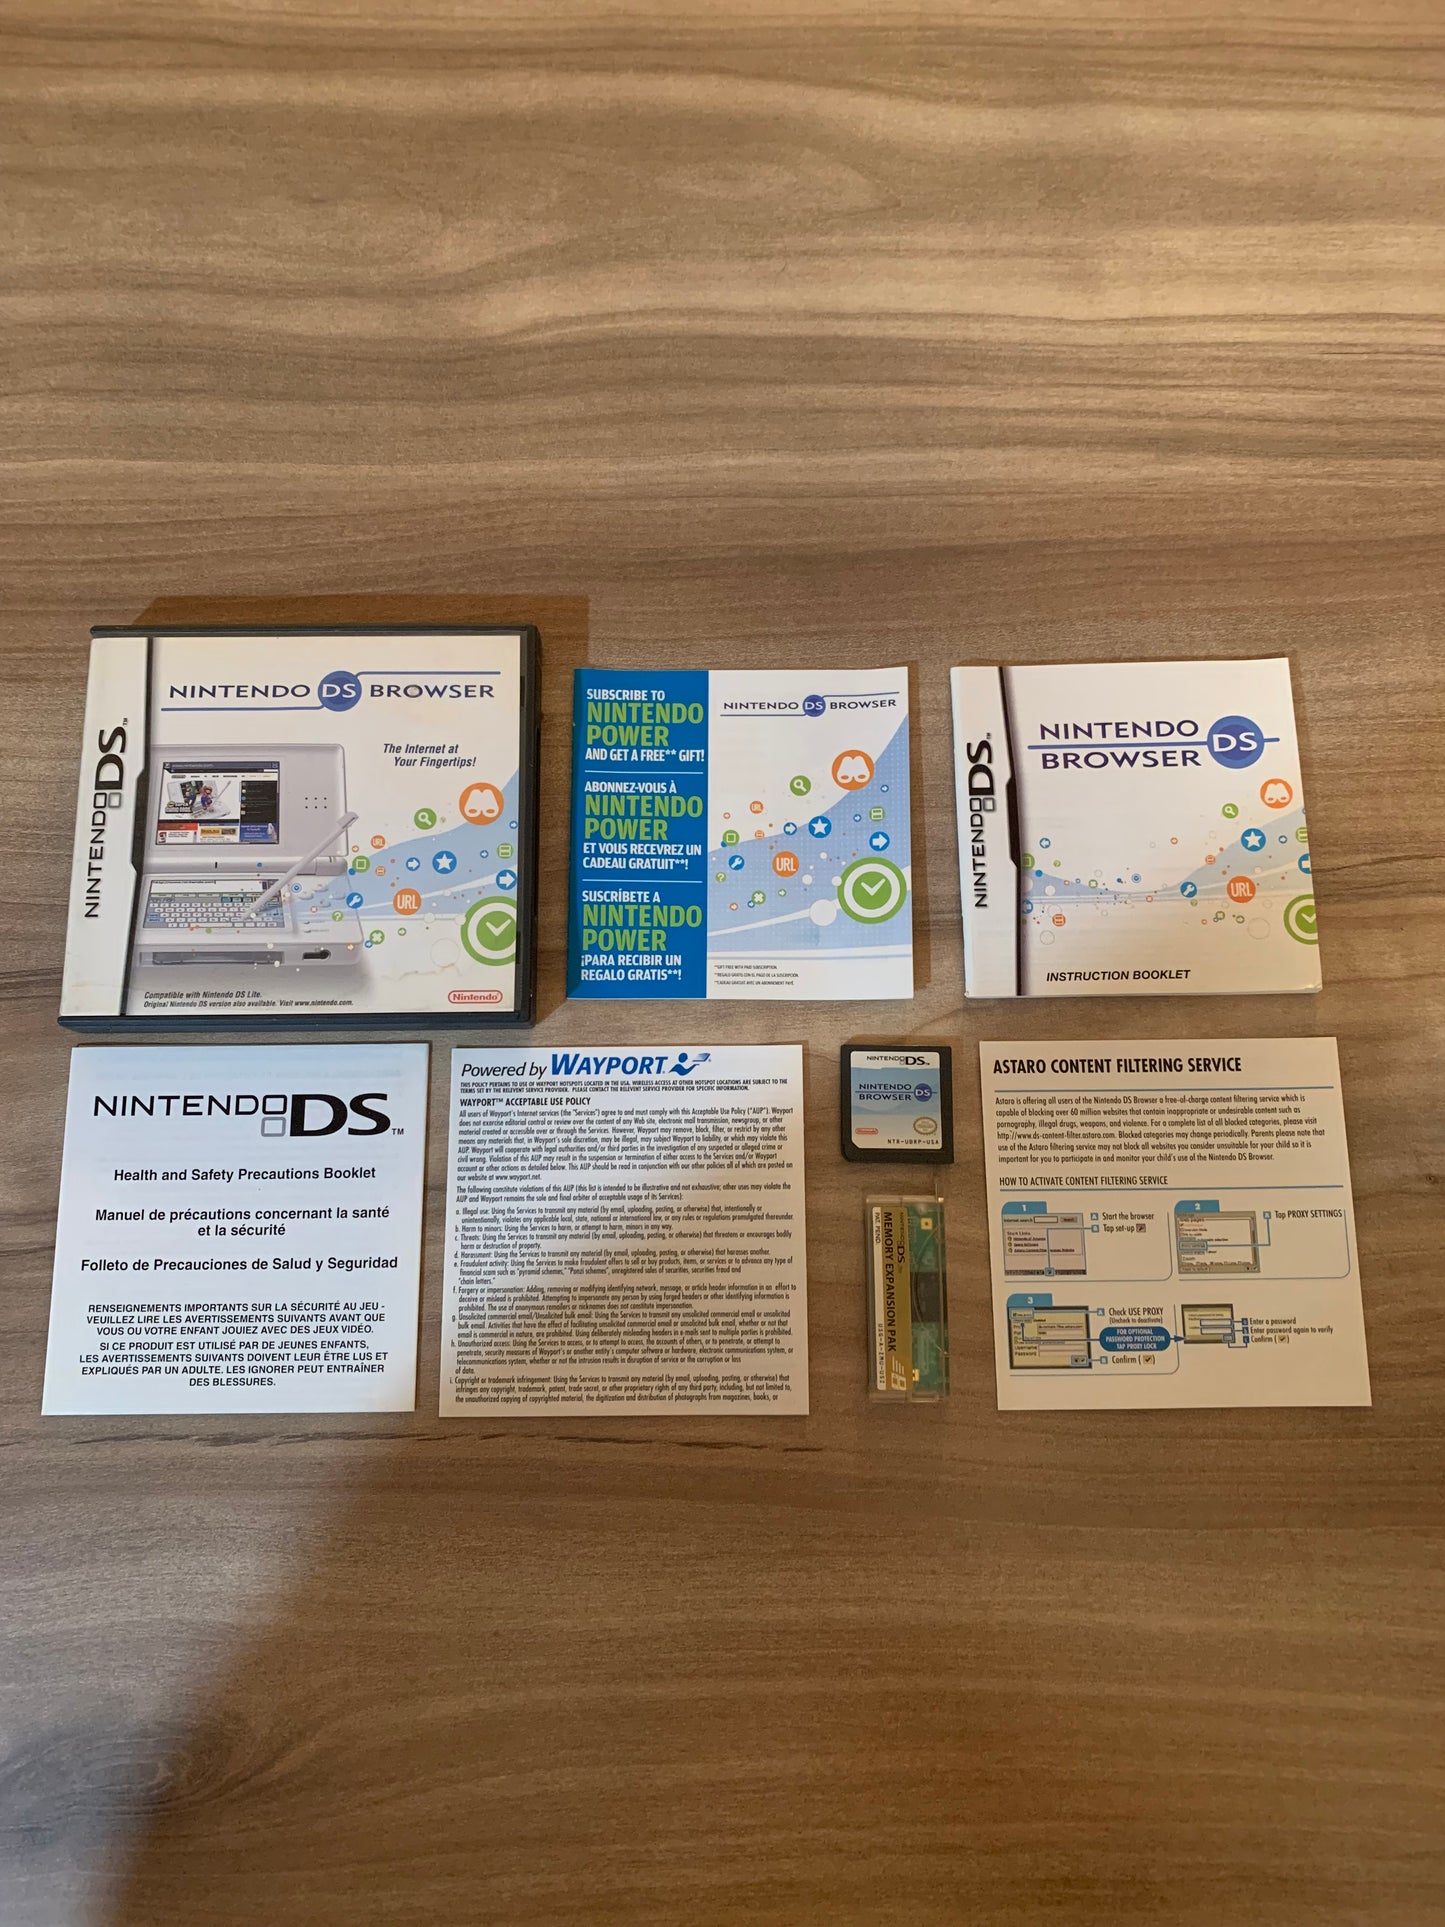 PiXEL-RETRO.COM : NINTENDO DS (DS) COMPLETE CIB BOX MANUAL GAME NTSC NINTENDO DS BROWSER